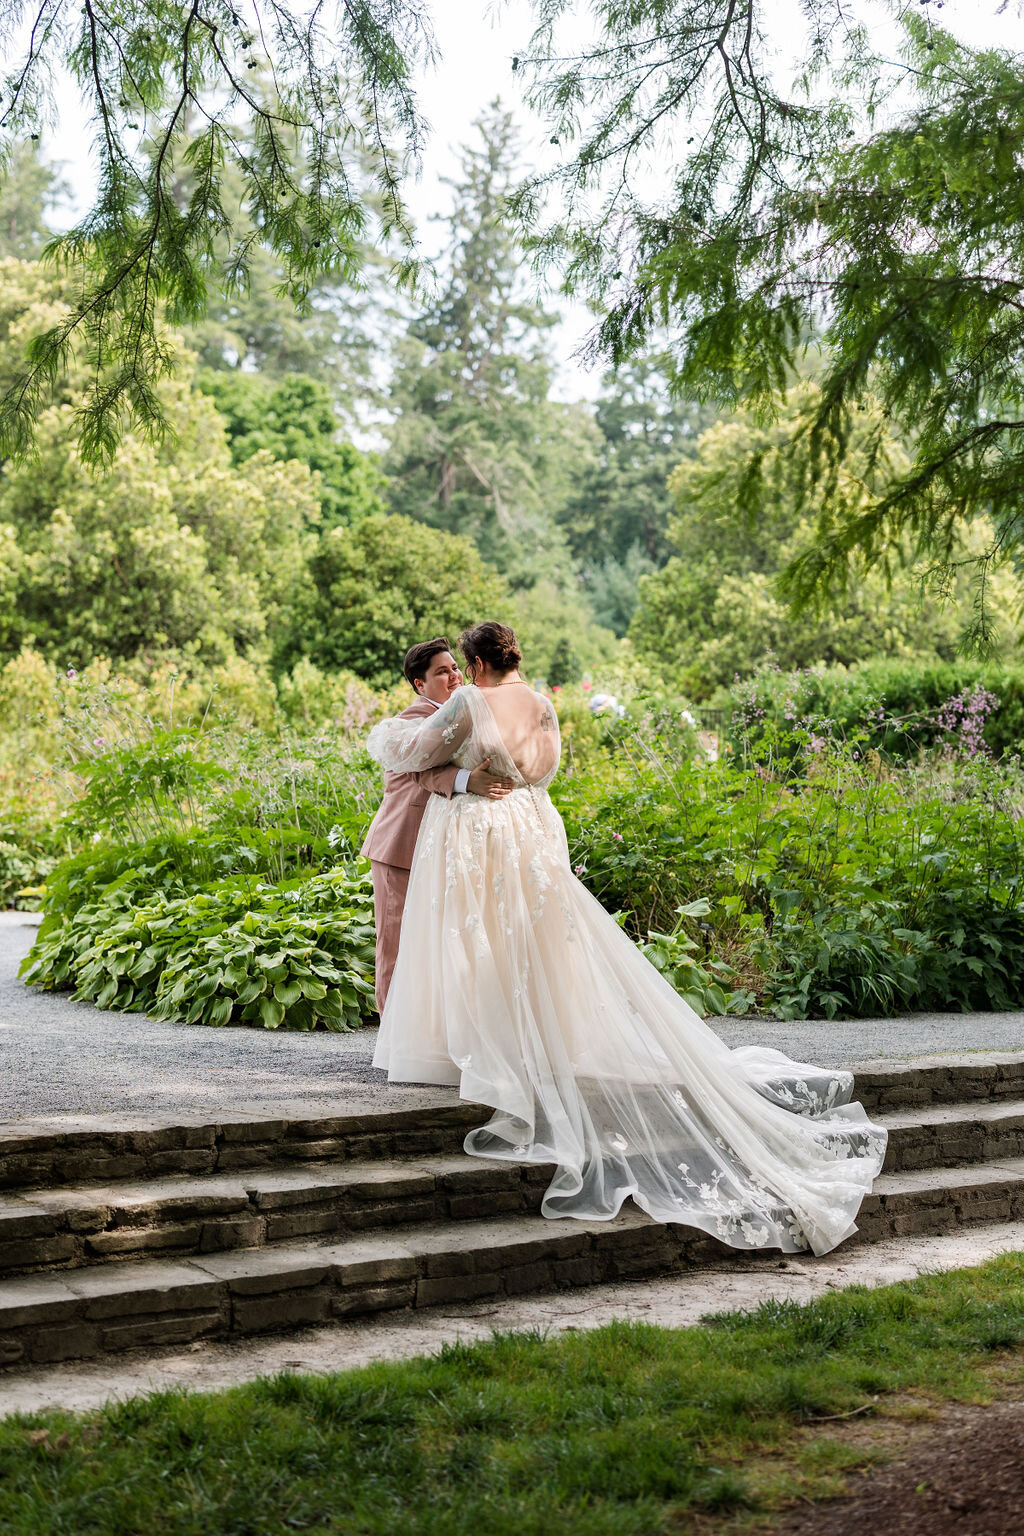 Longwood-Gardens-Lesbian-Wedding-Photos-byLGBTQ-owned-photography-company-Swiger-Photography-4.jpg